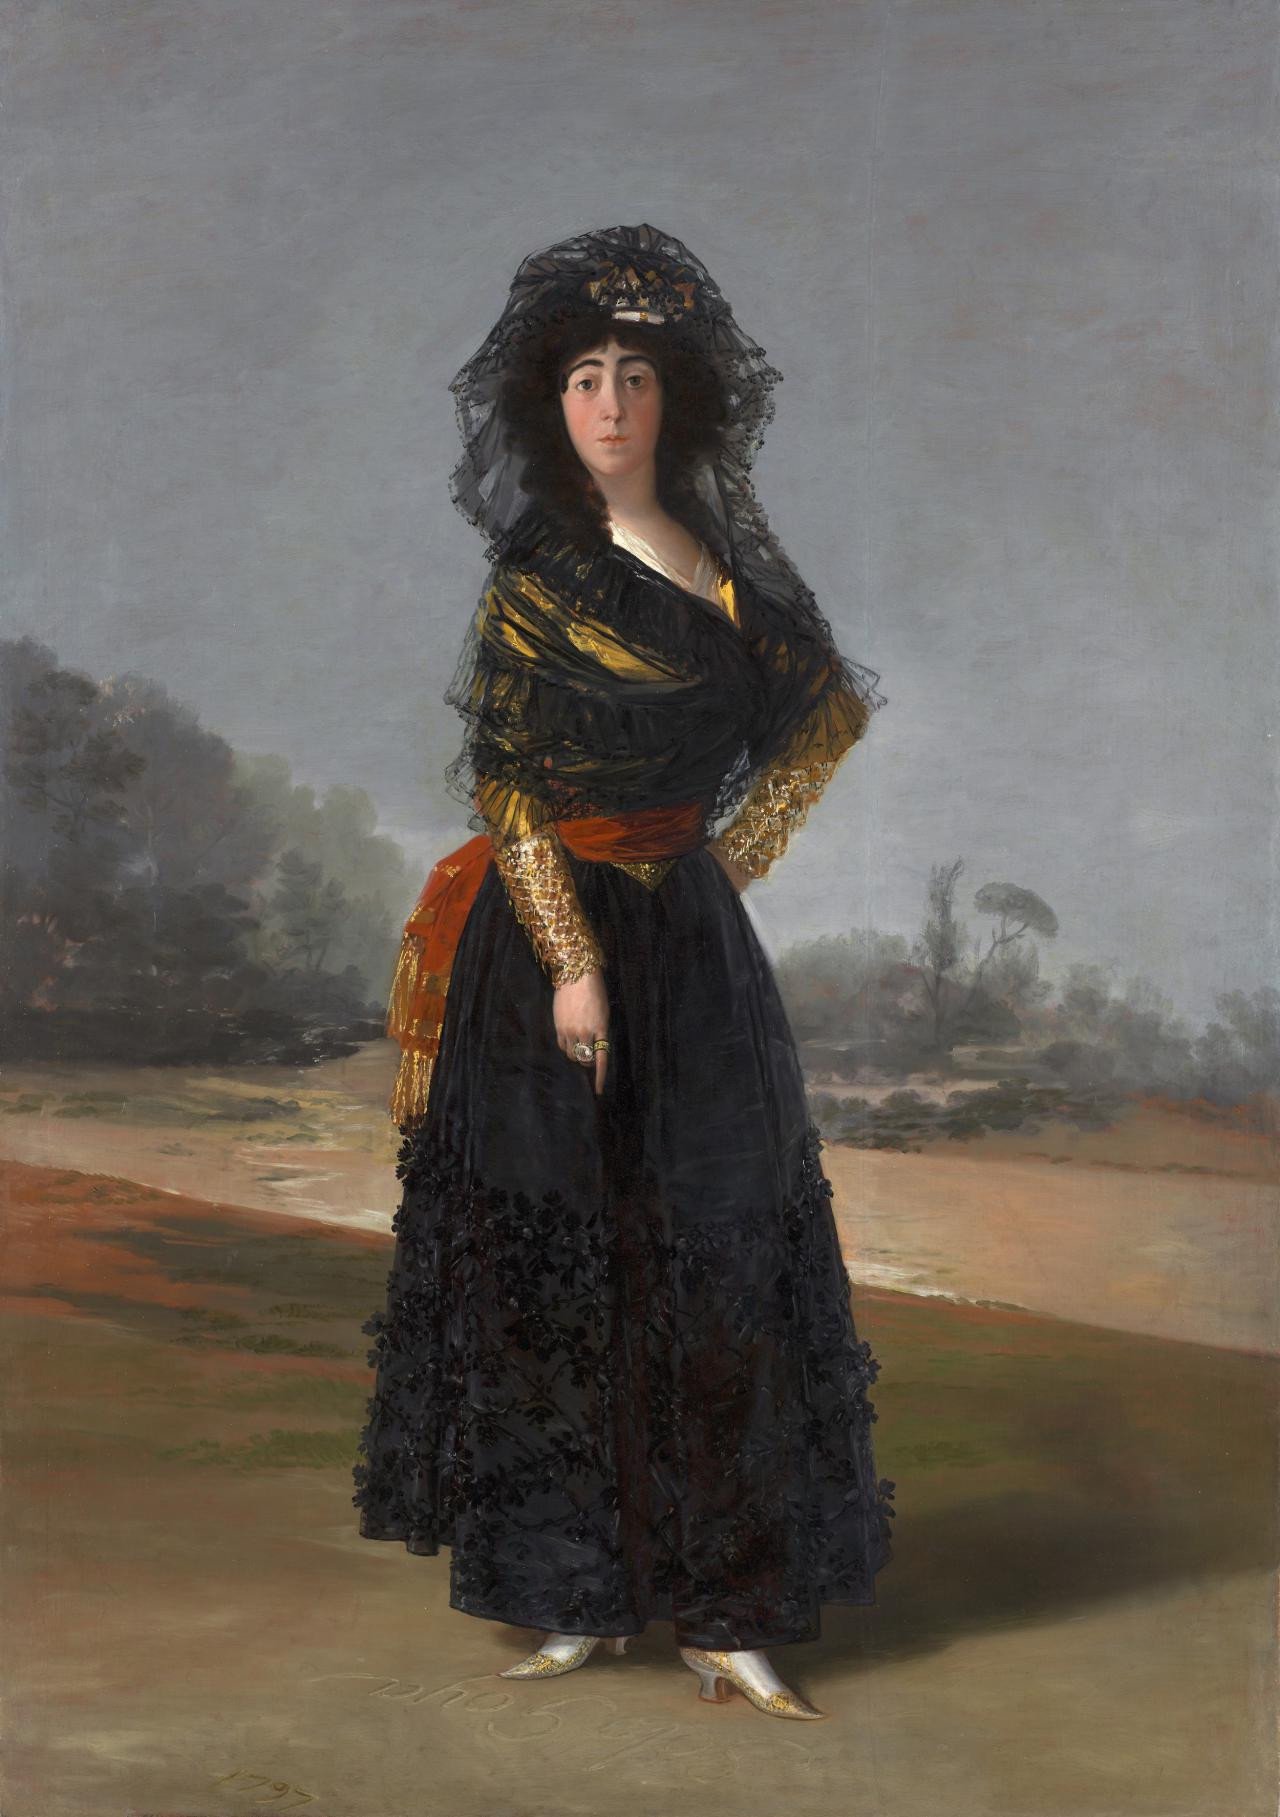 La Duchesse d' Alba by Francisco Goya - 1797 - 210 x 148 cm Hispanic Society Museum & Library